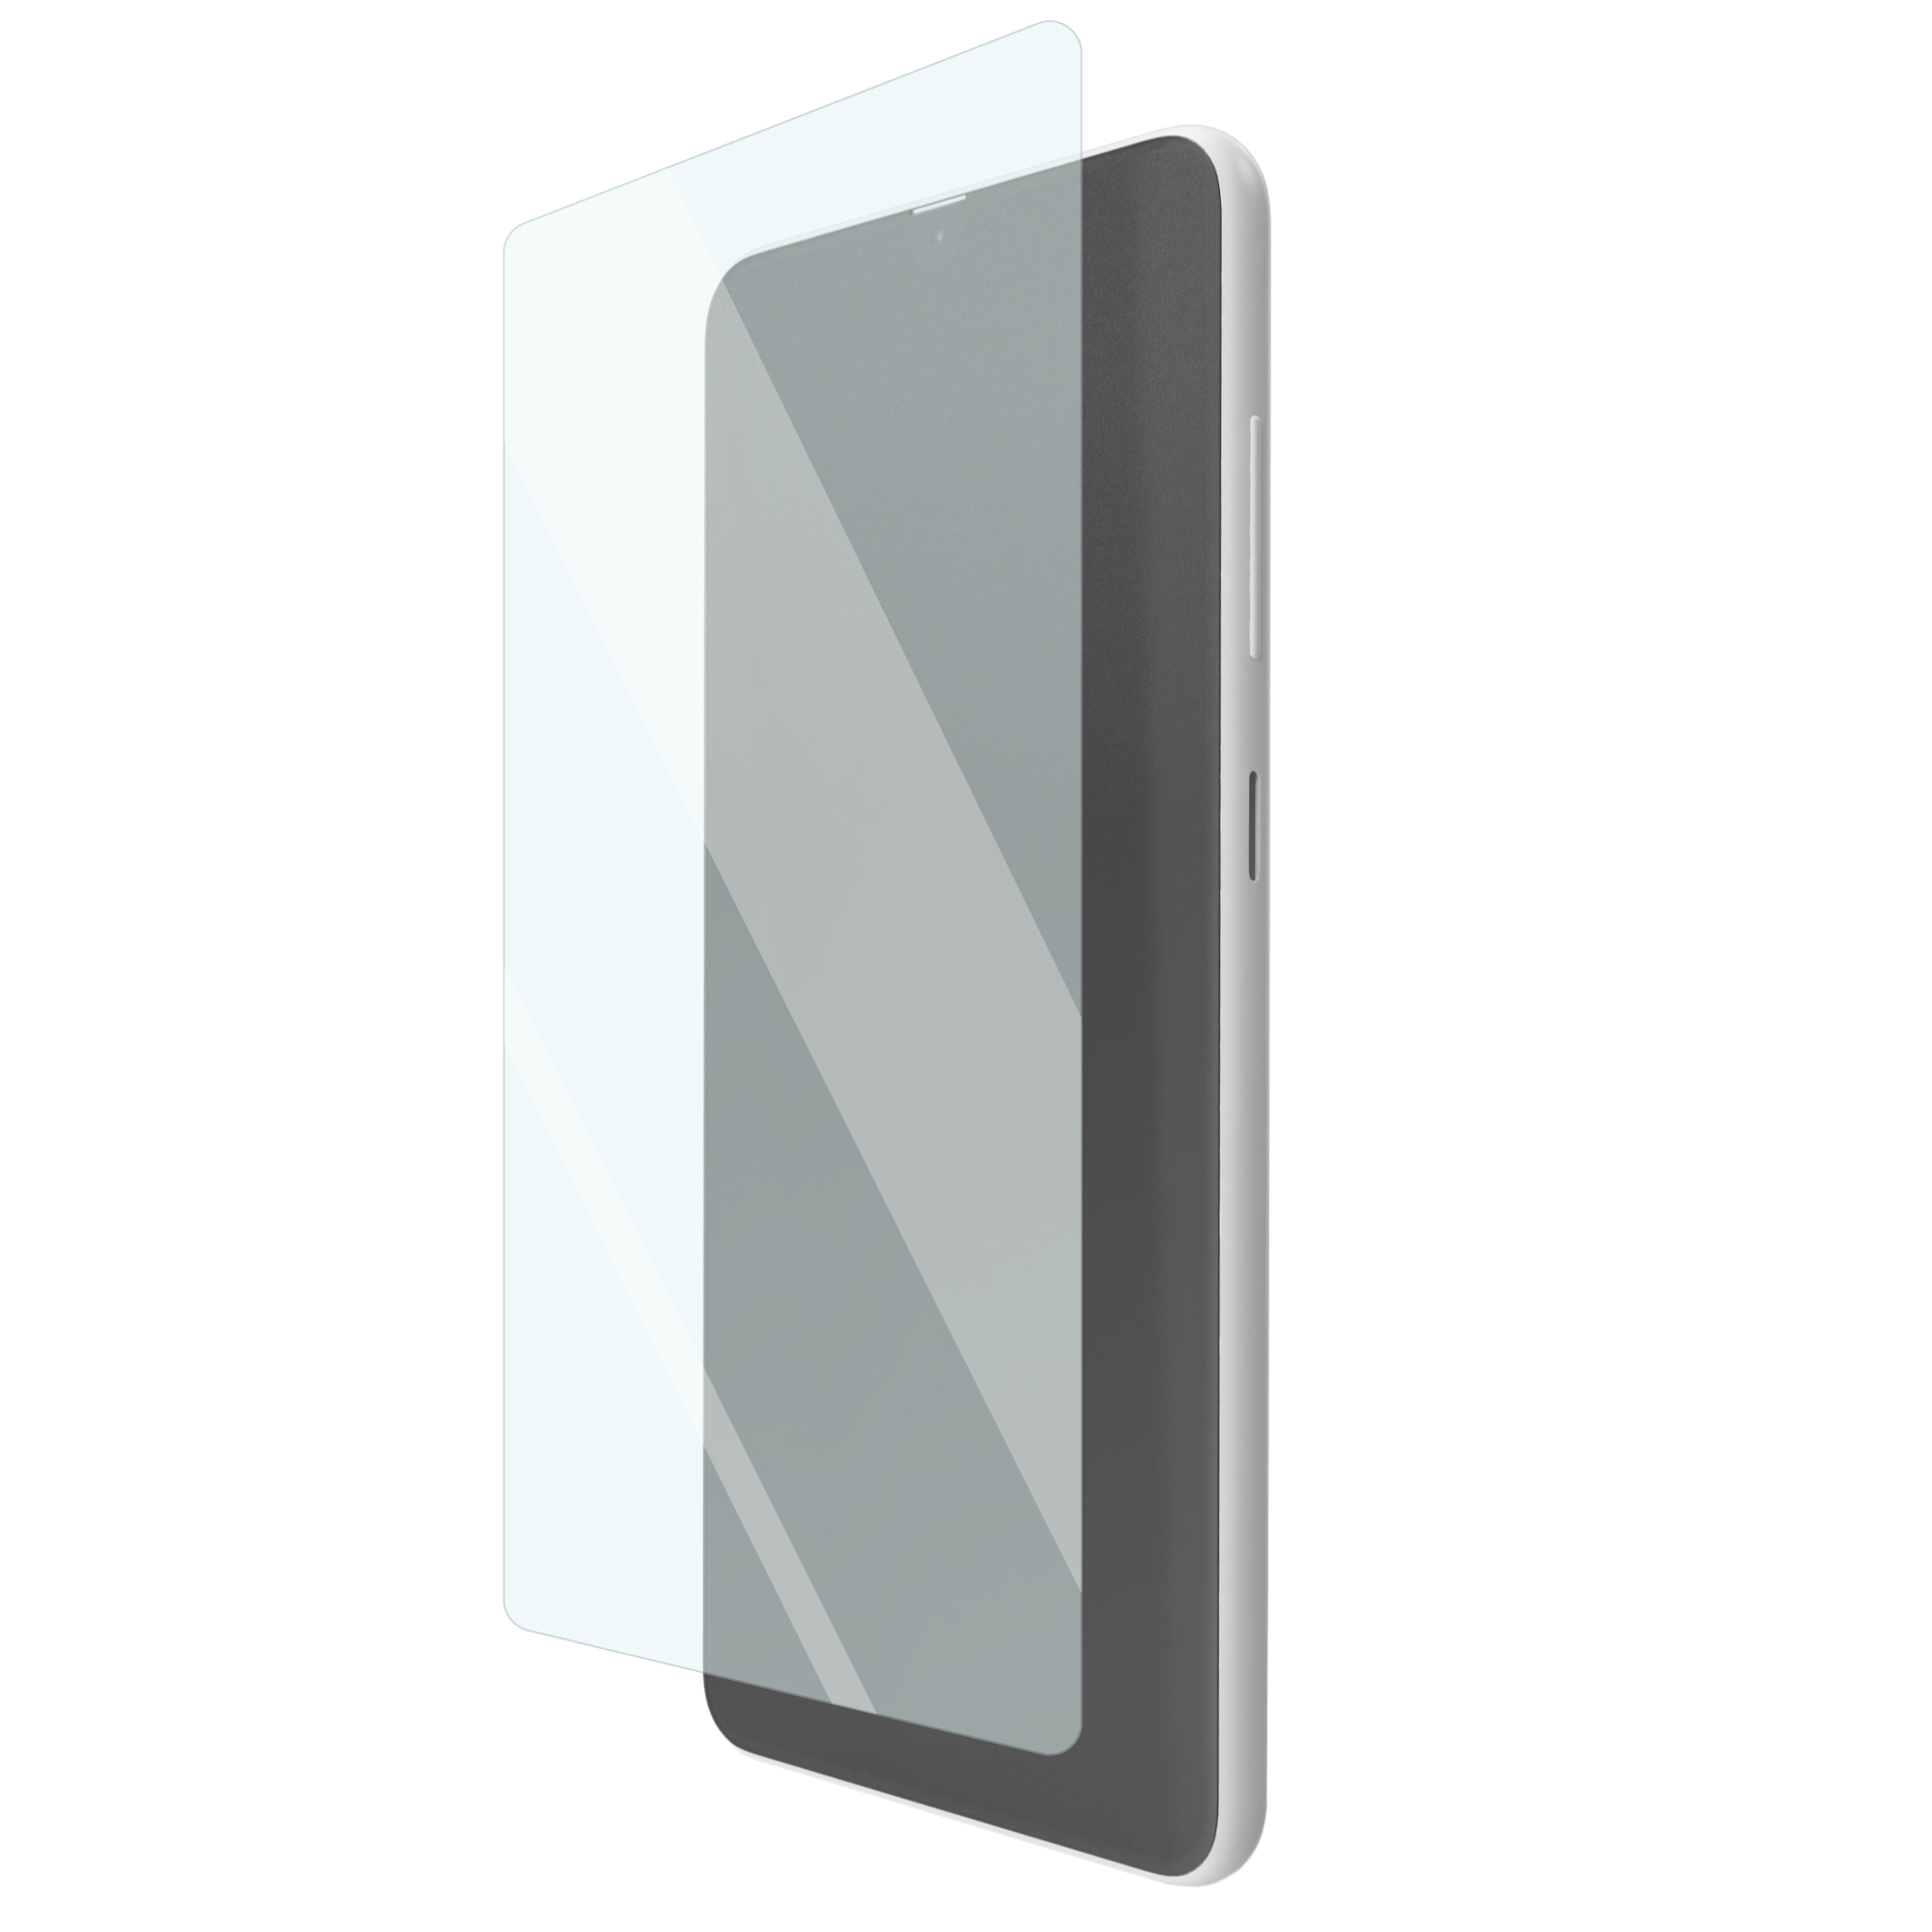 Folie de protectie silicon ShieldUP HiTech Regenerable pentru Sony Xperia XA thumb